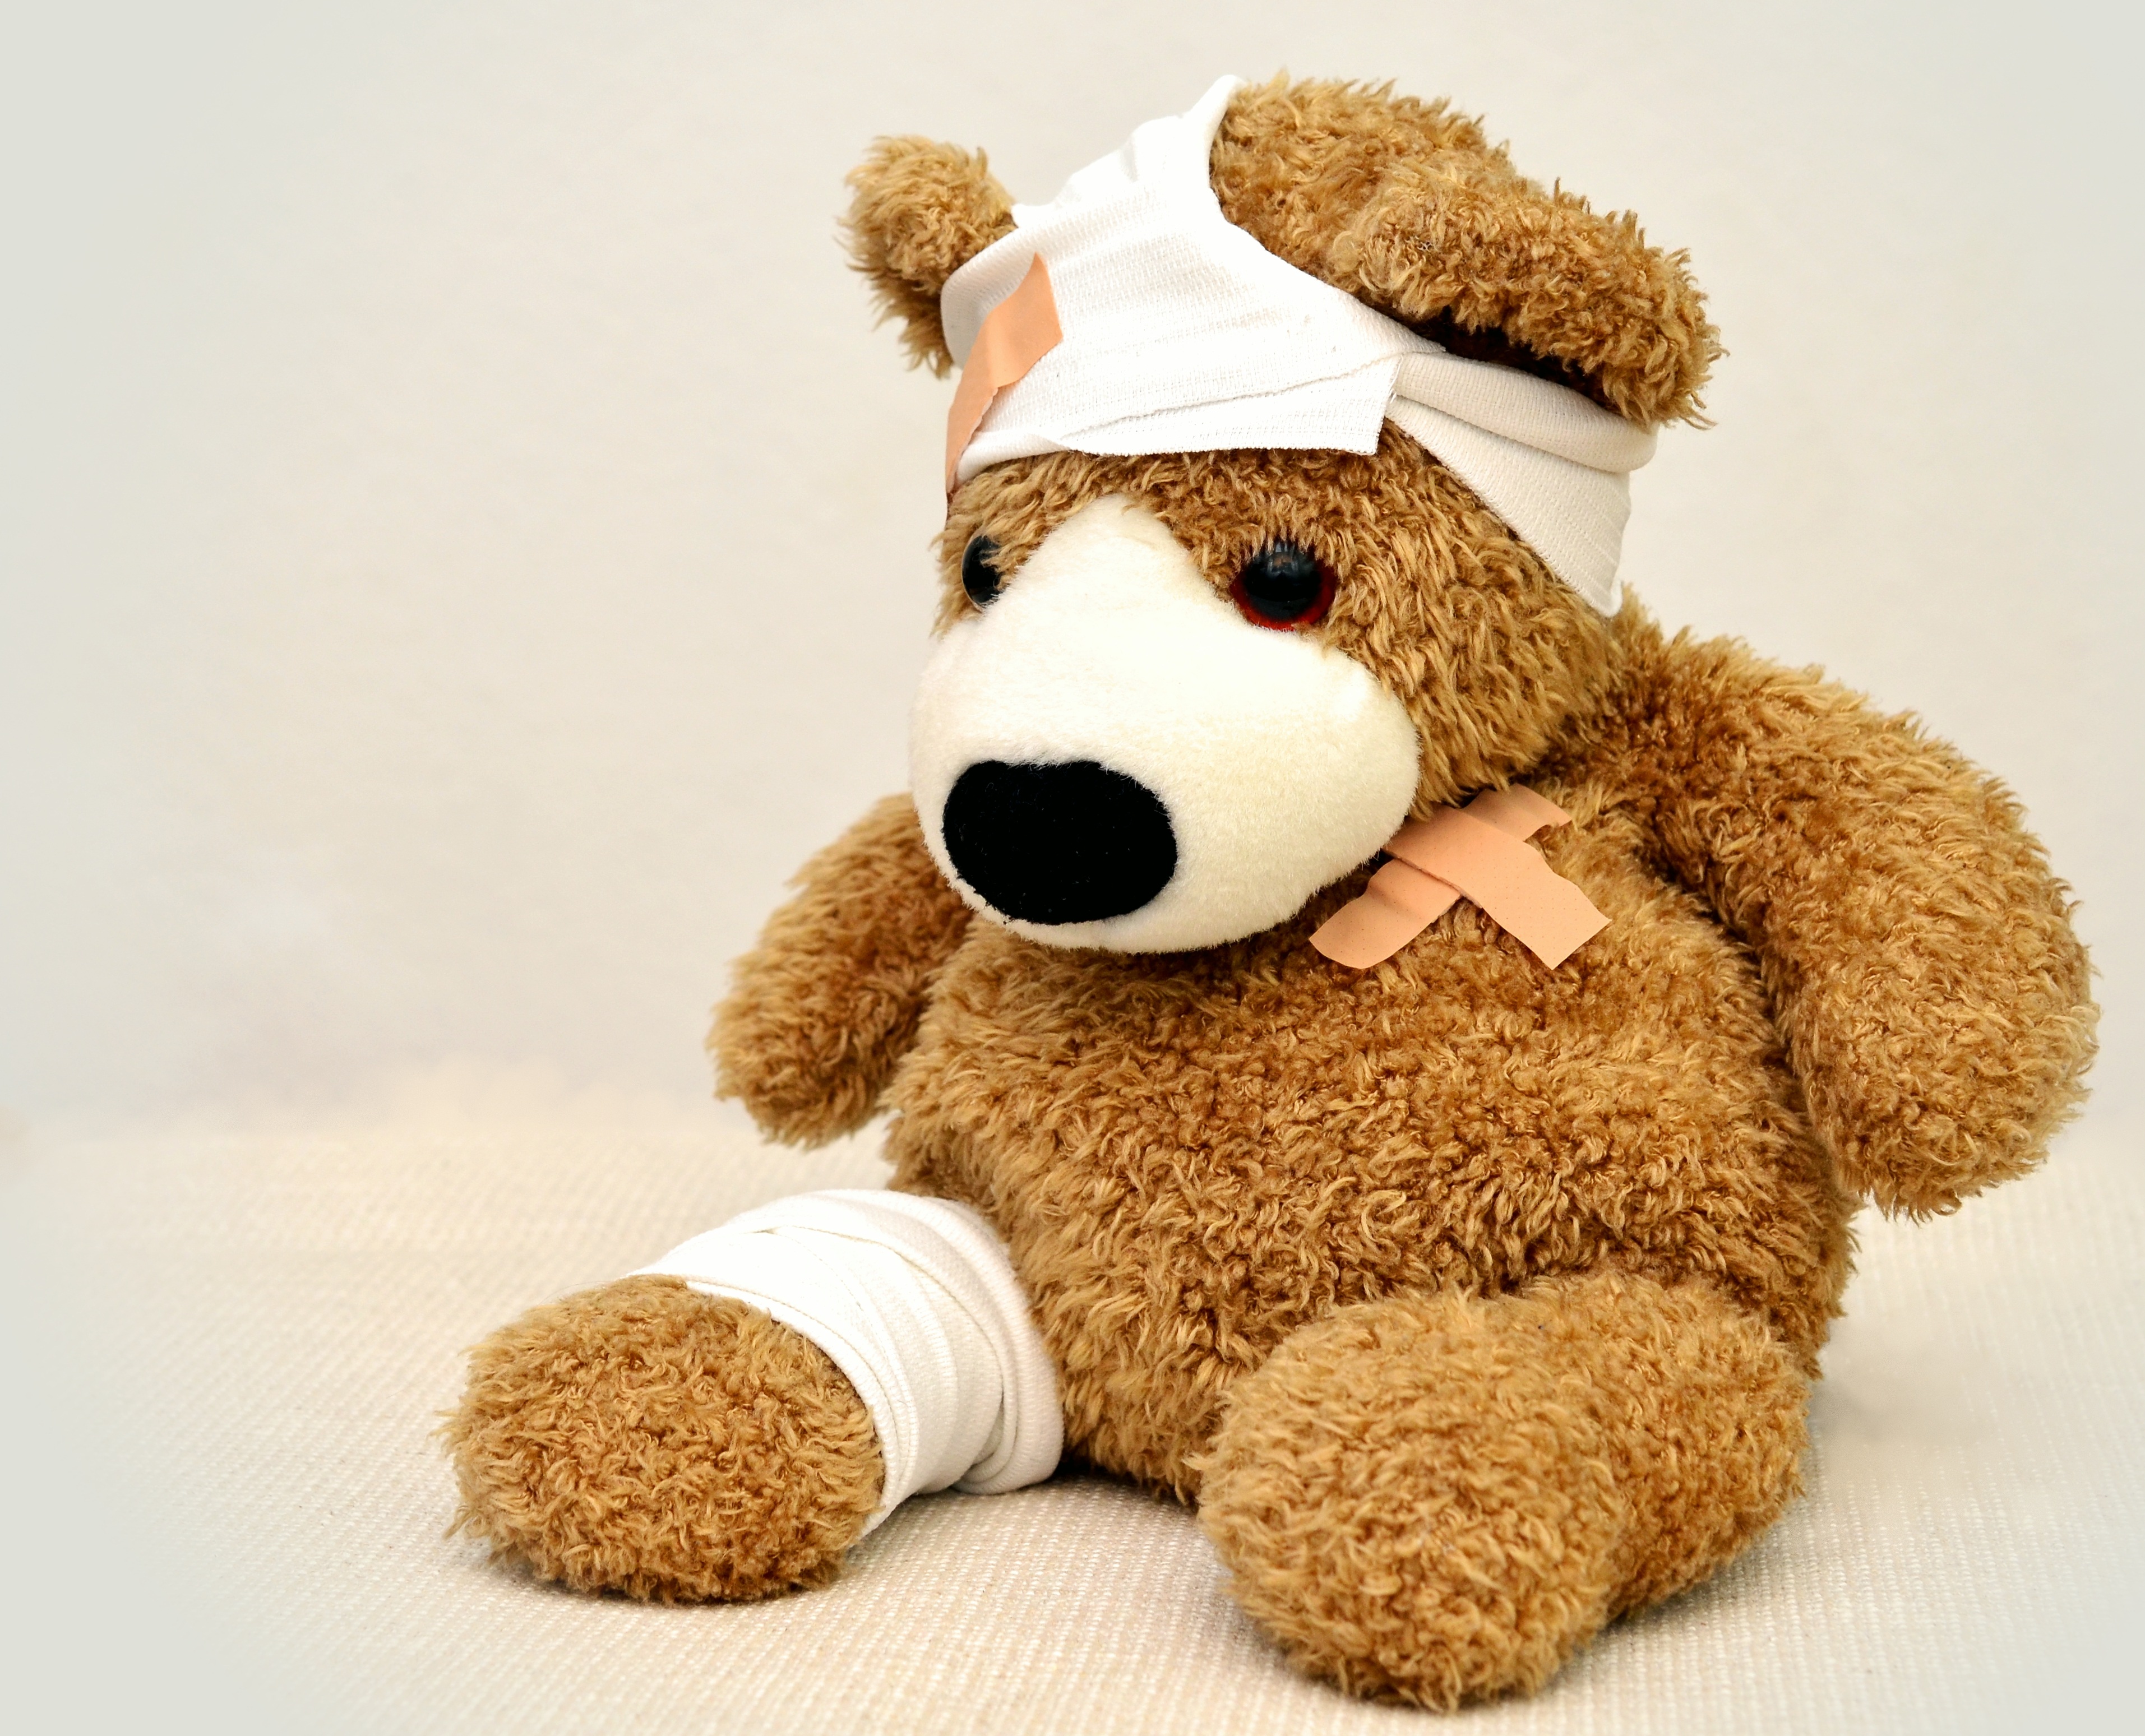 Bear with bandages